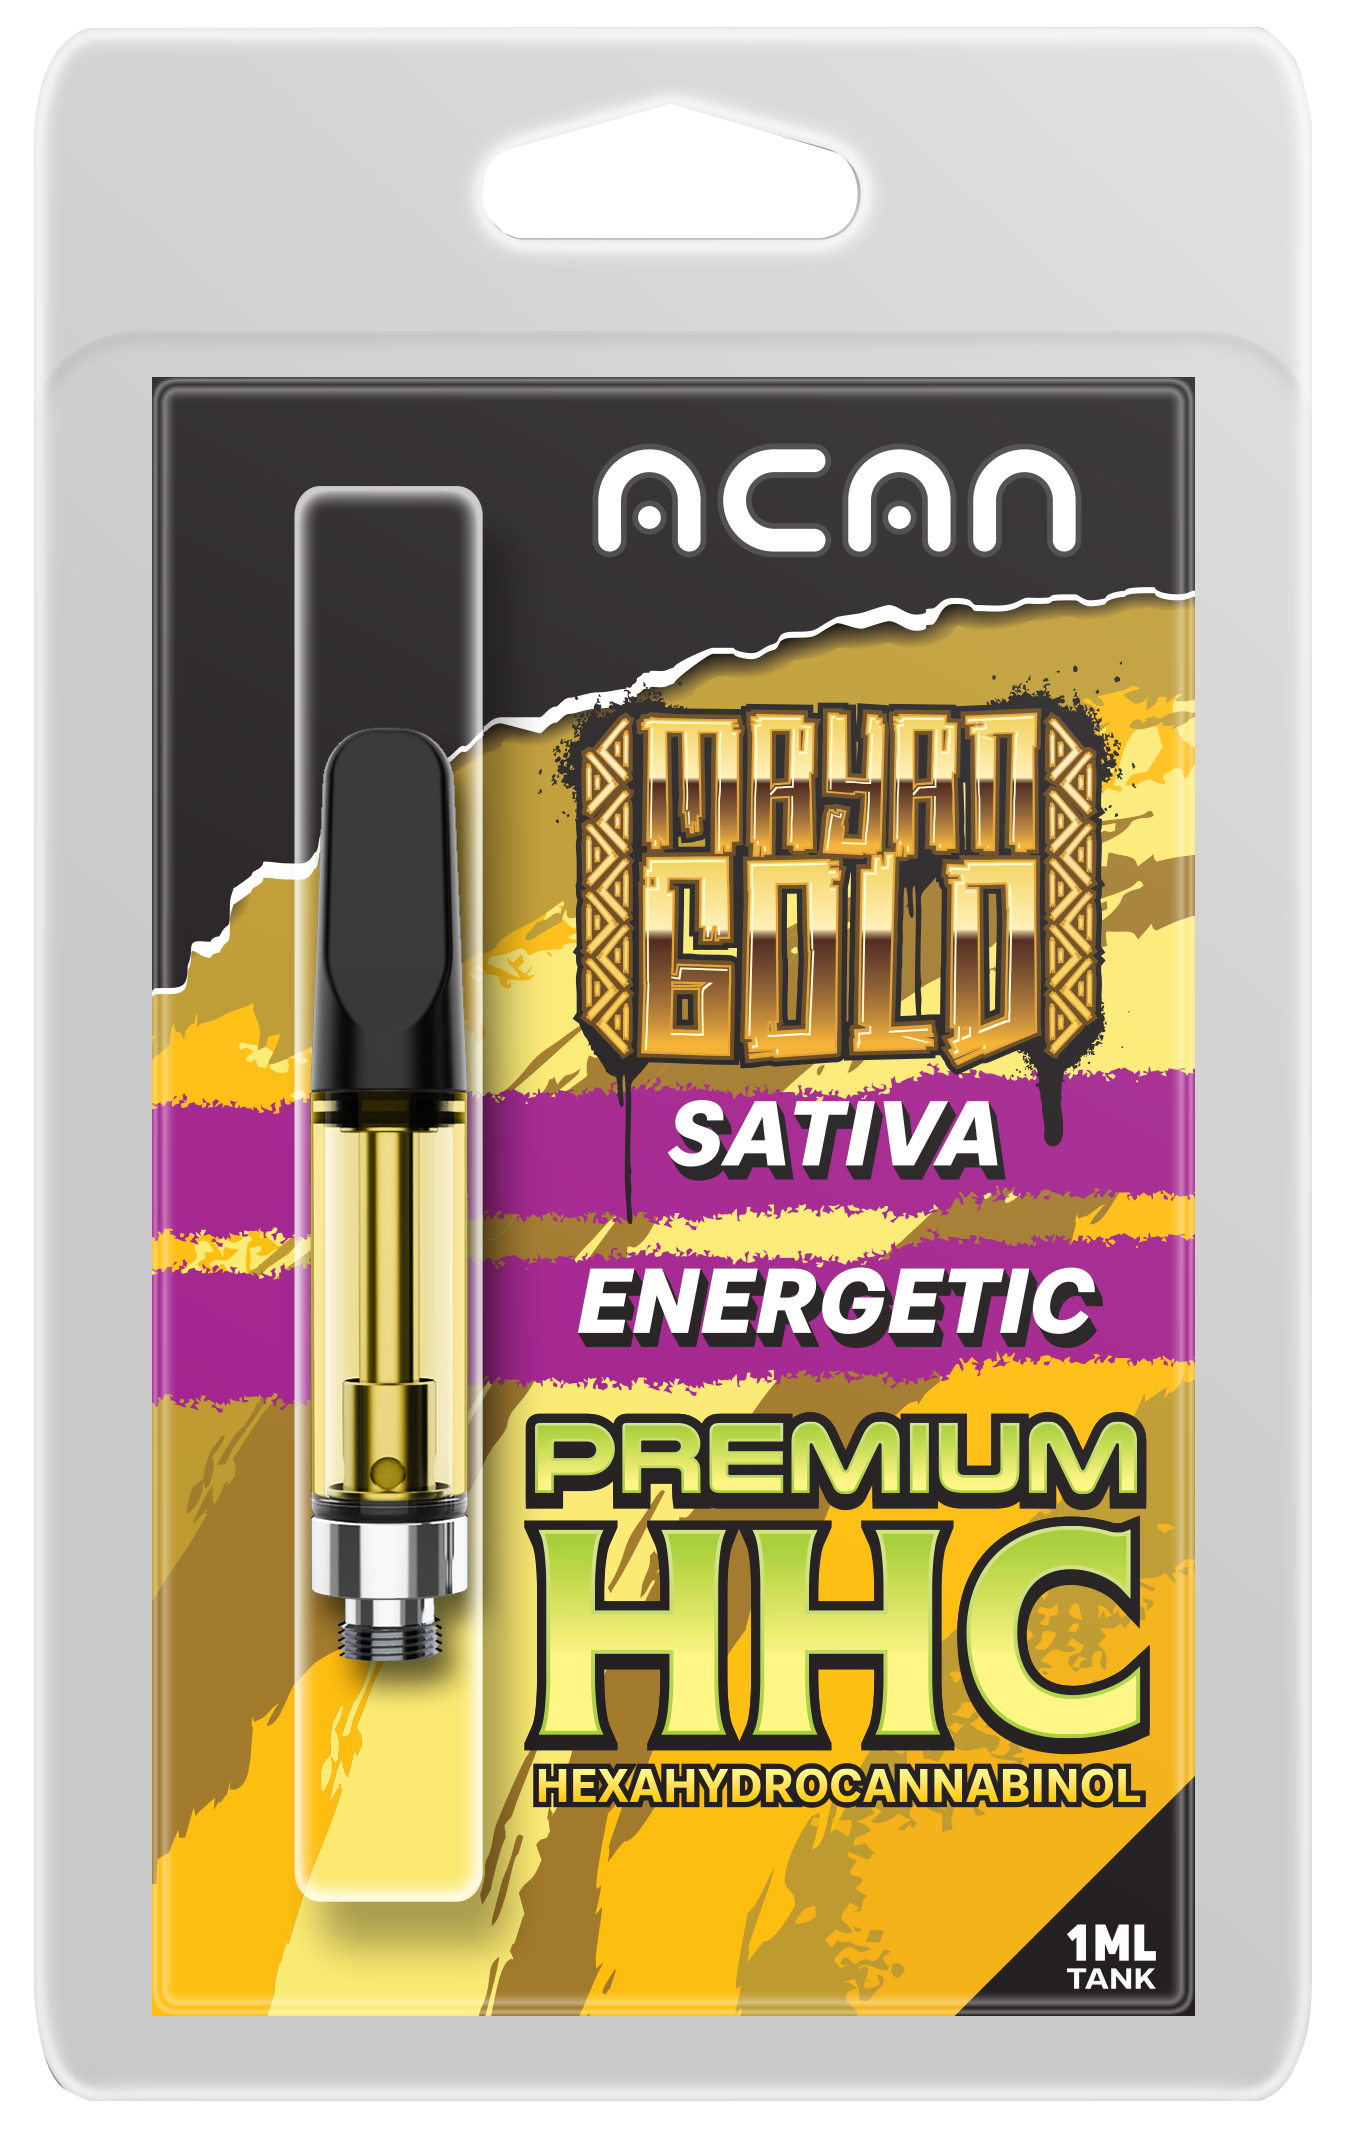 Mayan Gold Premium HHC